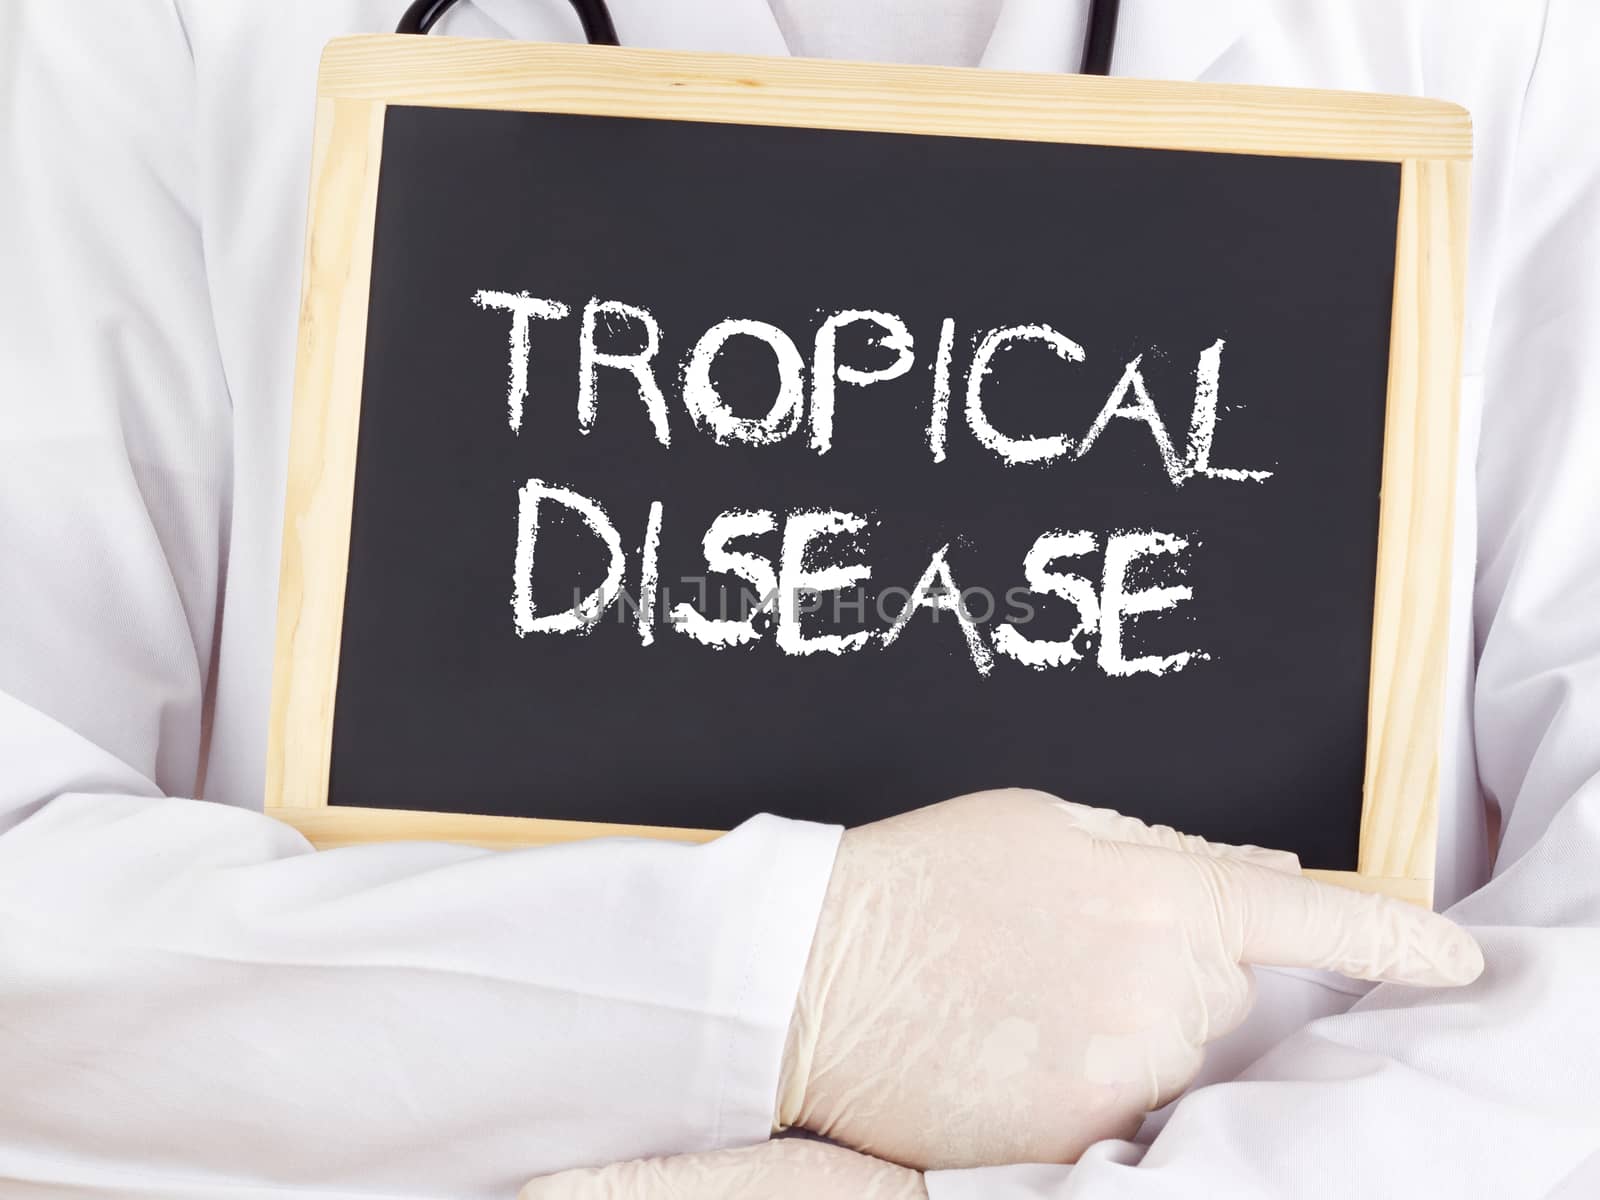 Doctor shows information on blackboard: Tropical disease